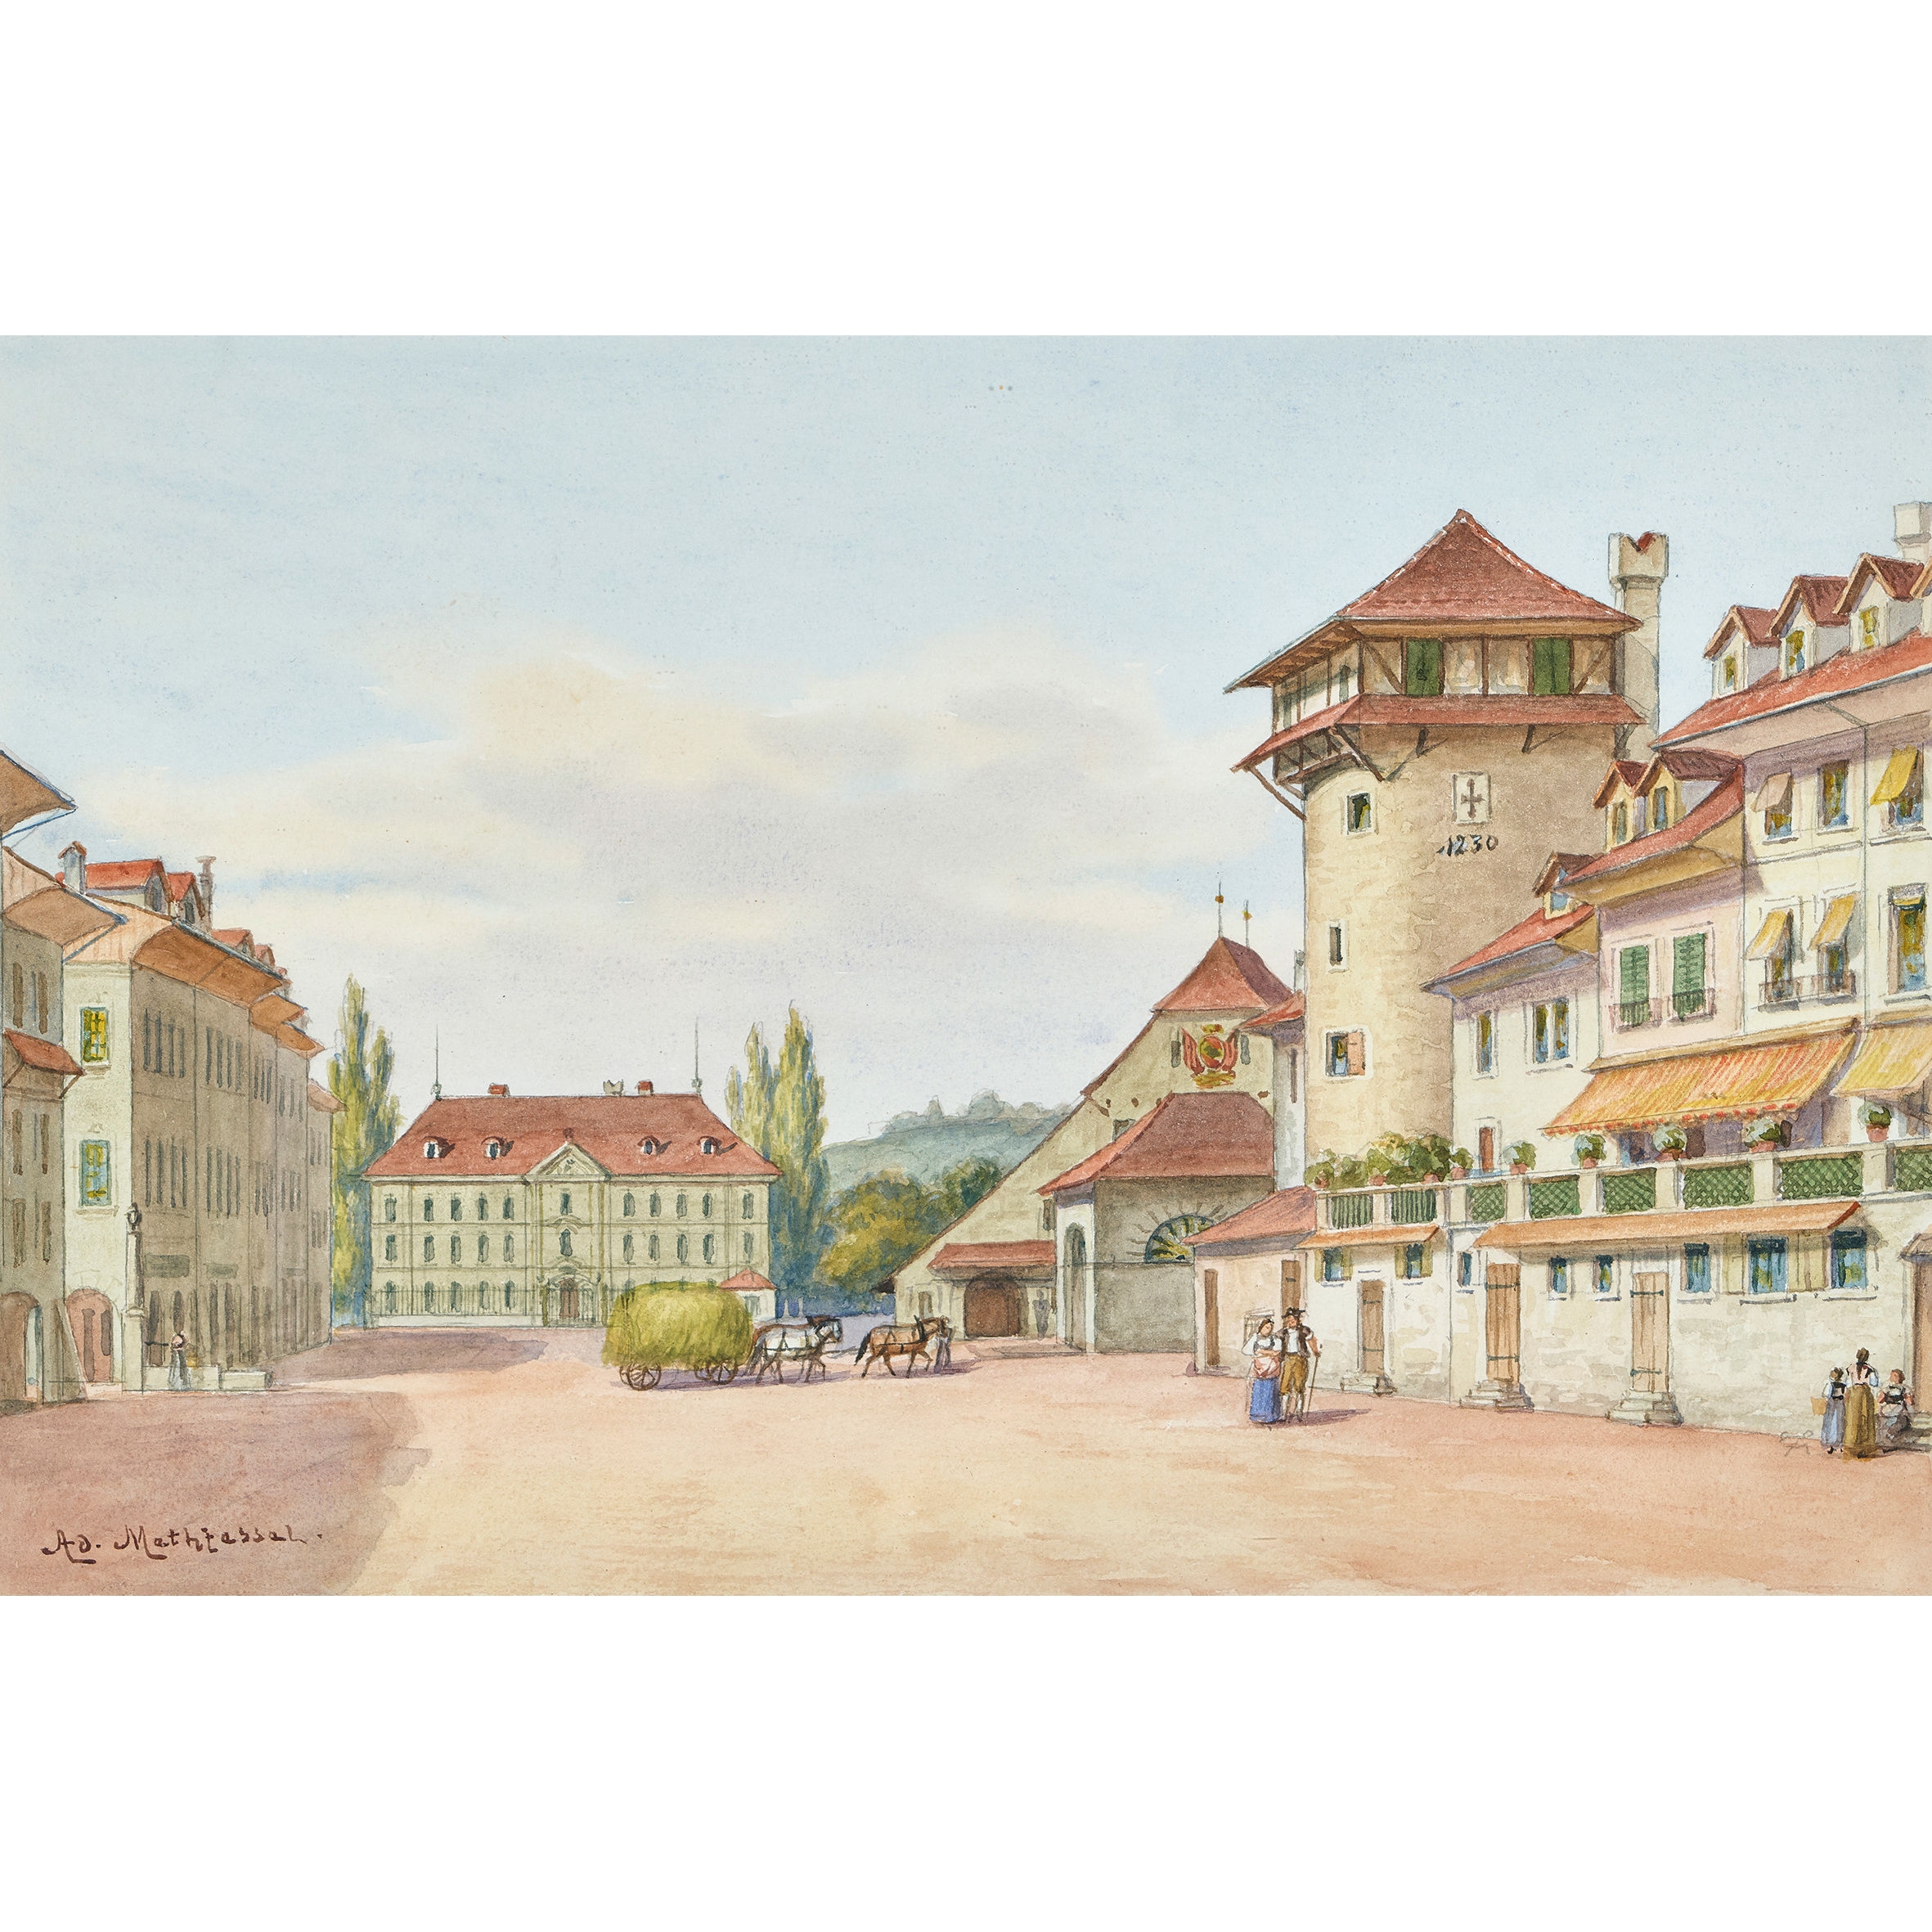 Artwork by Adolfo Methfessel, Blick auf den Waisenhausplatz, Made of watercolor over pencil